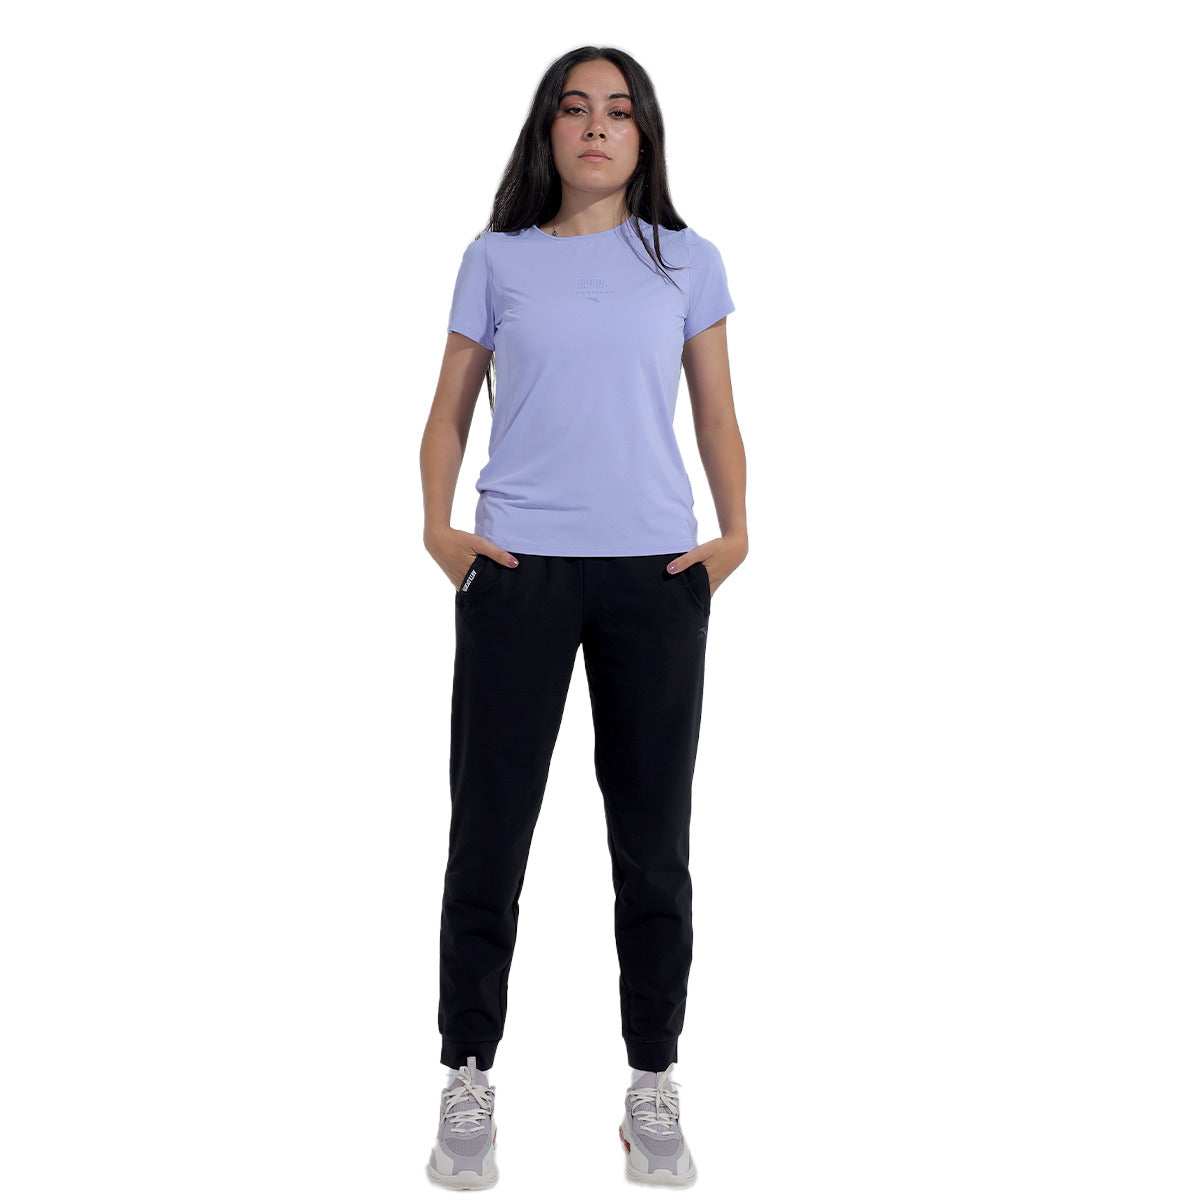 Anta Sports T-Shirt For Women, Light Blue